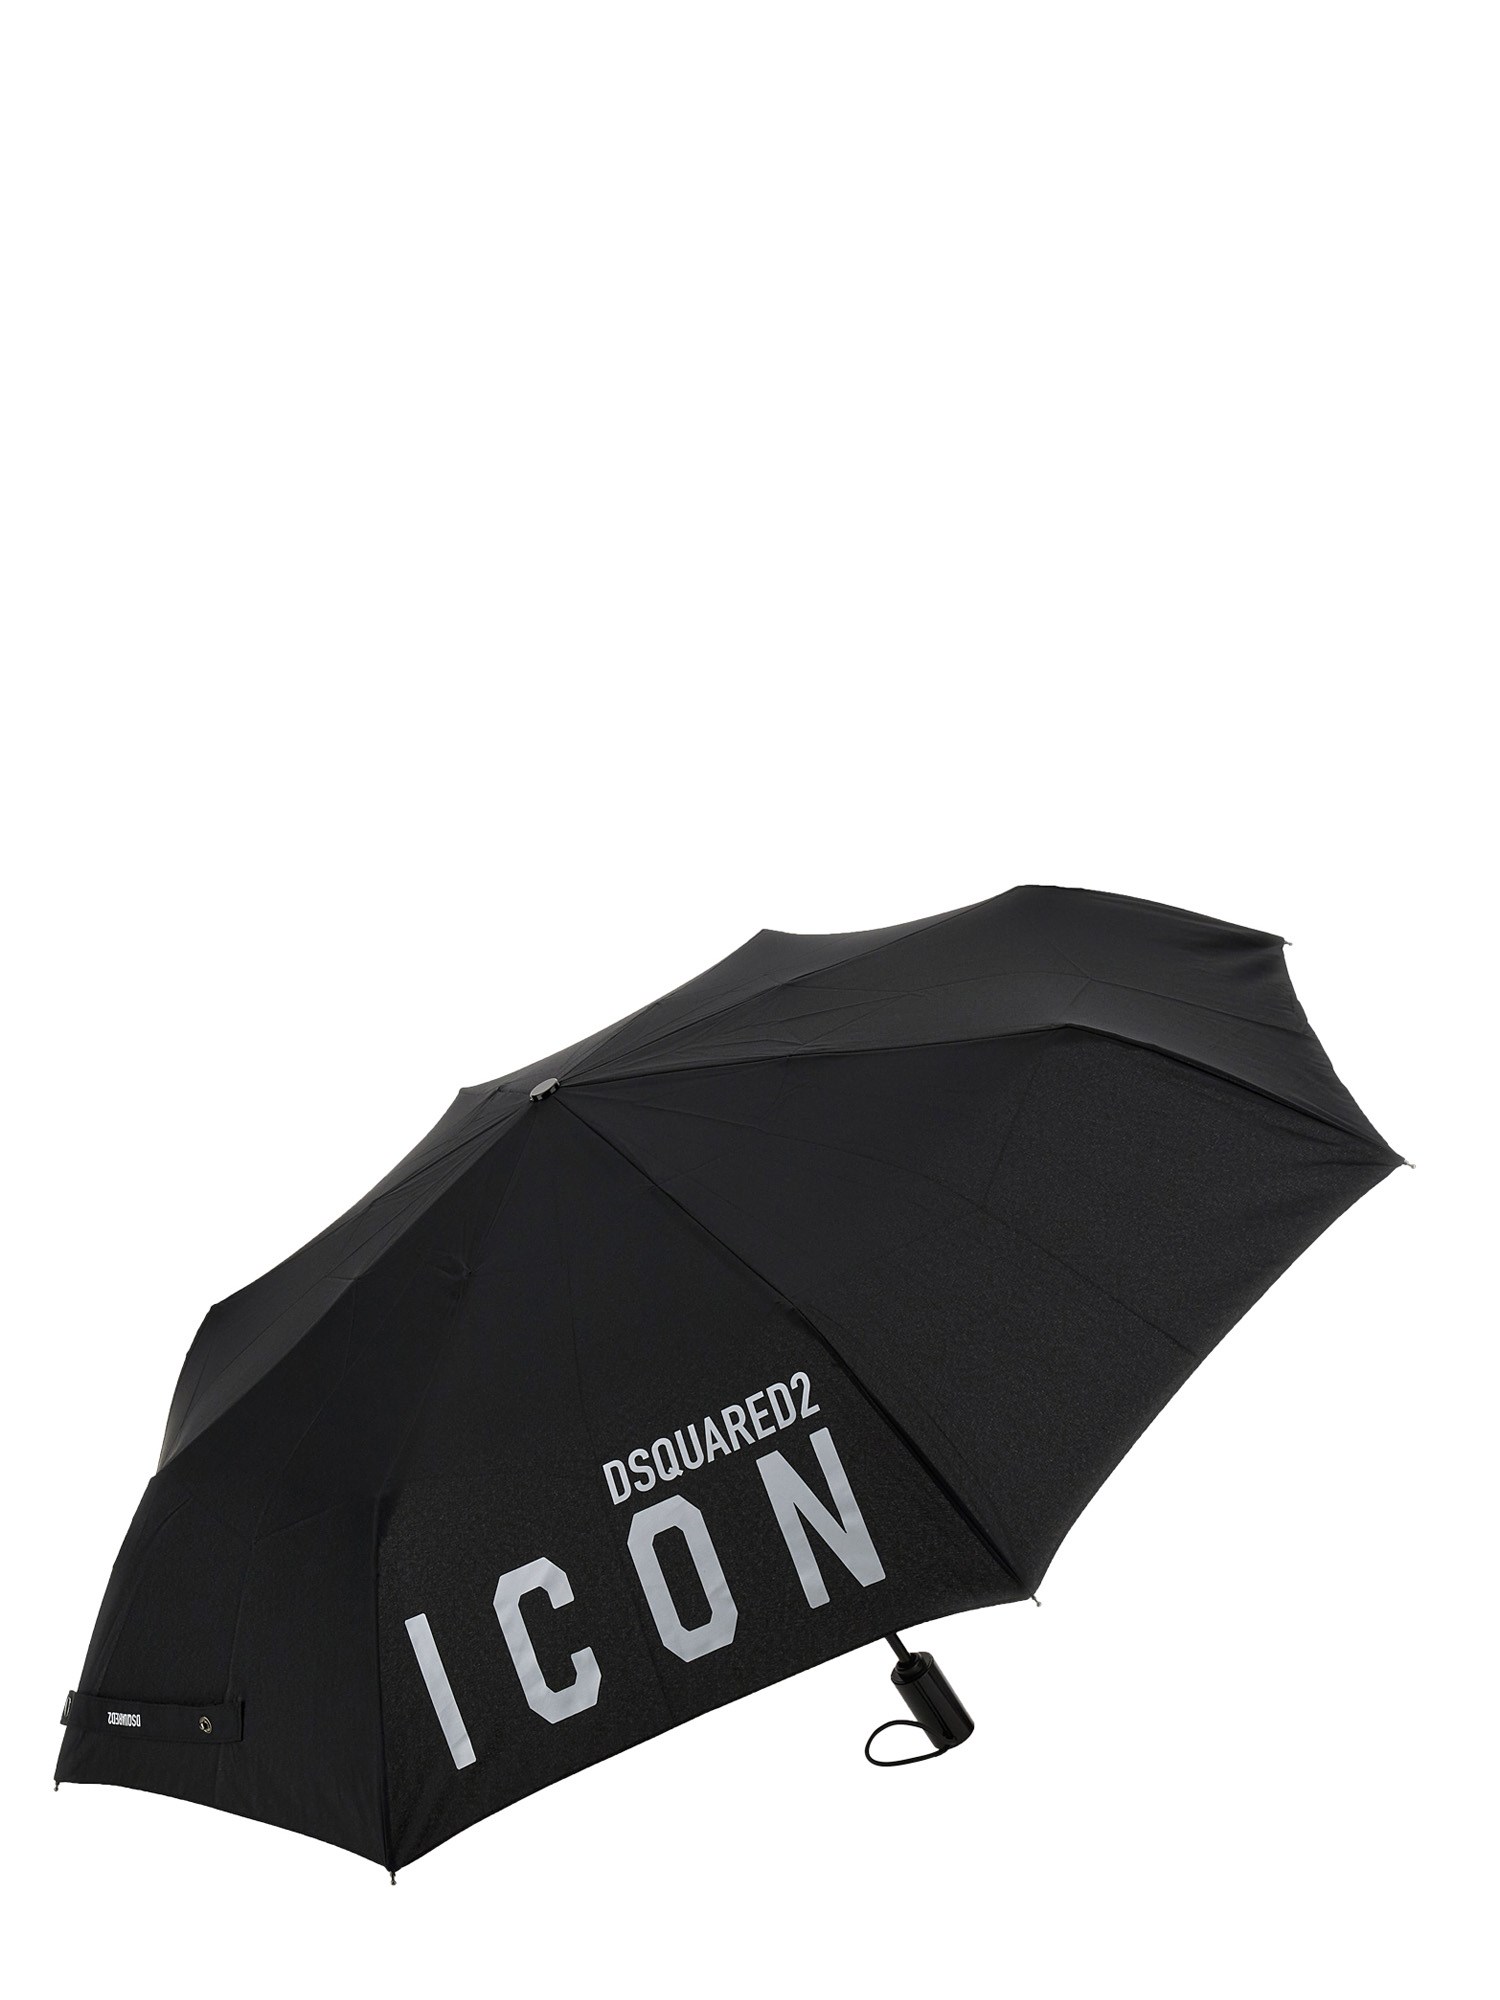 dsquared dsquared umbrella with logo